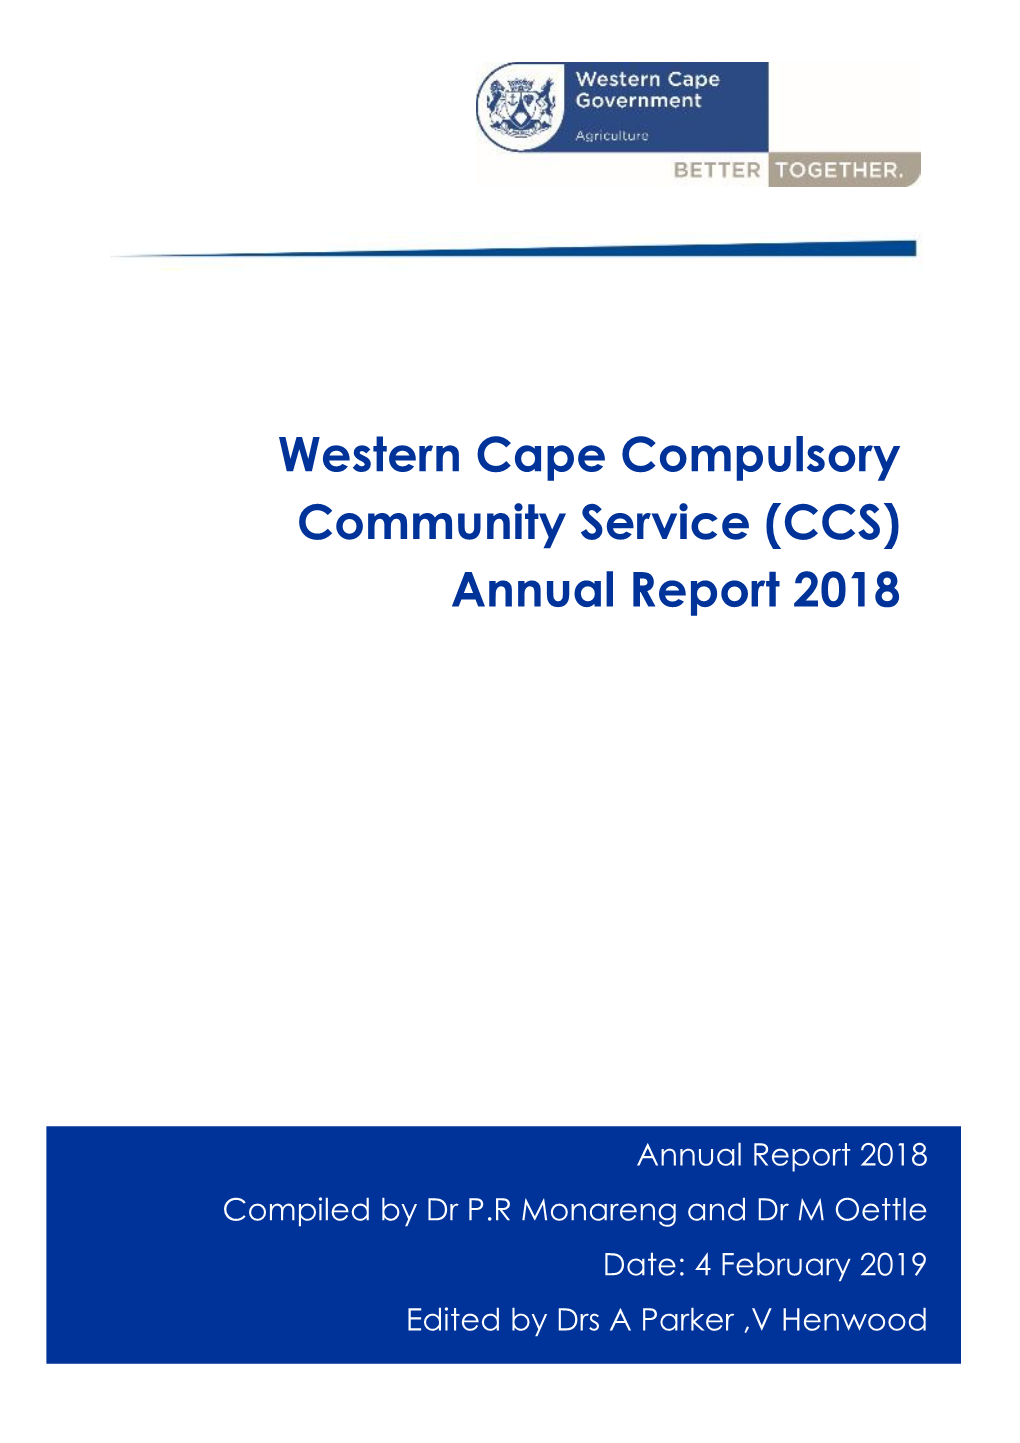 Western Cape Compulsory Community Service (CCS) Annual Report 2018